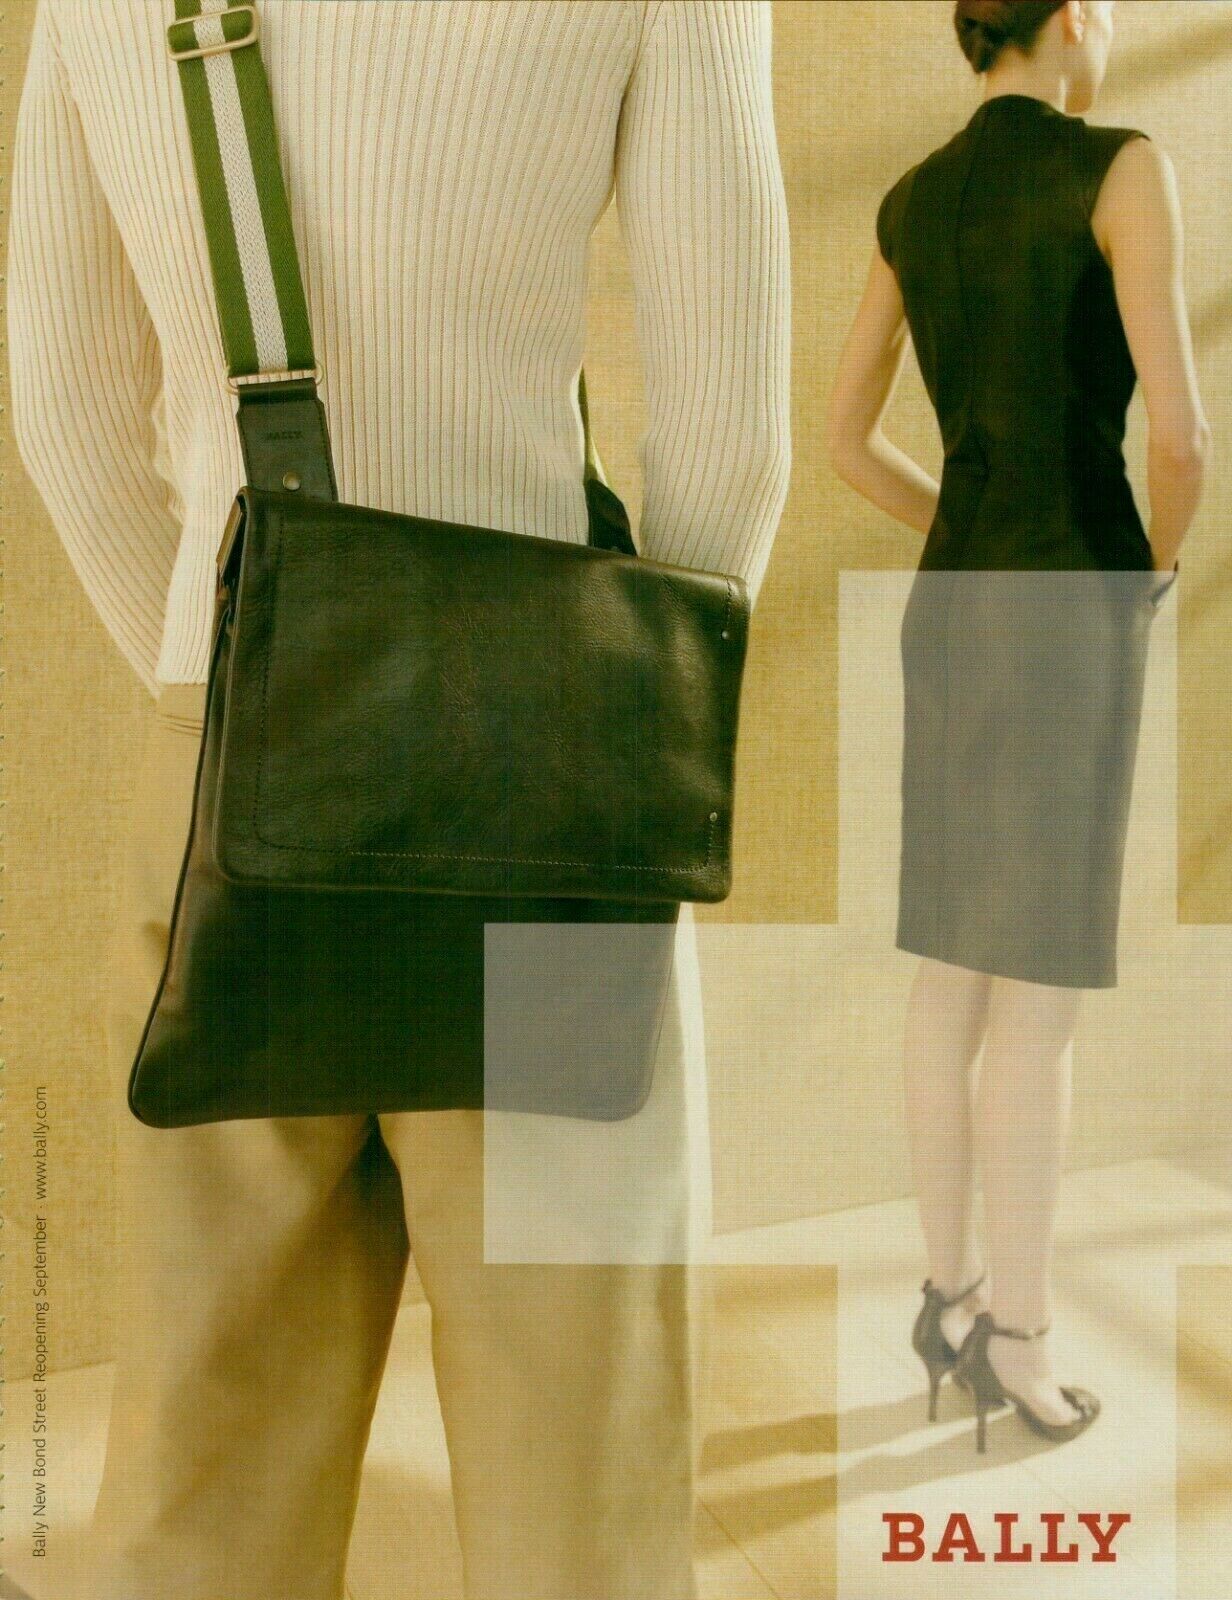 2004 Bally Fashion Leather Satchel Purse Woman Shoes Model Vintage Print Ad